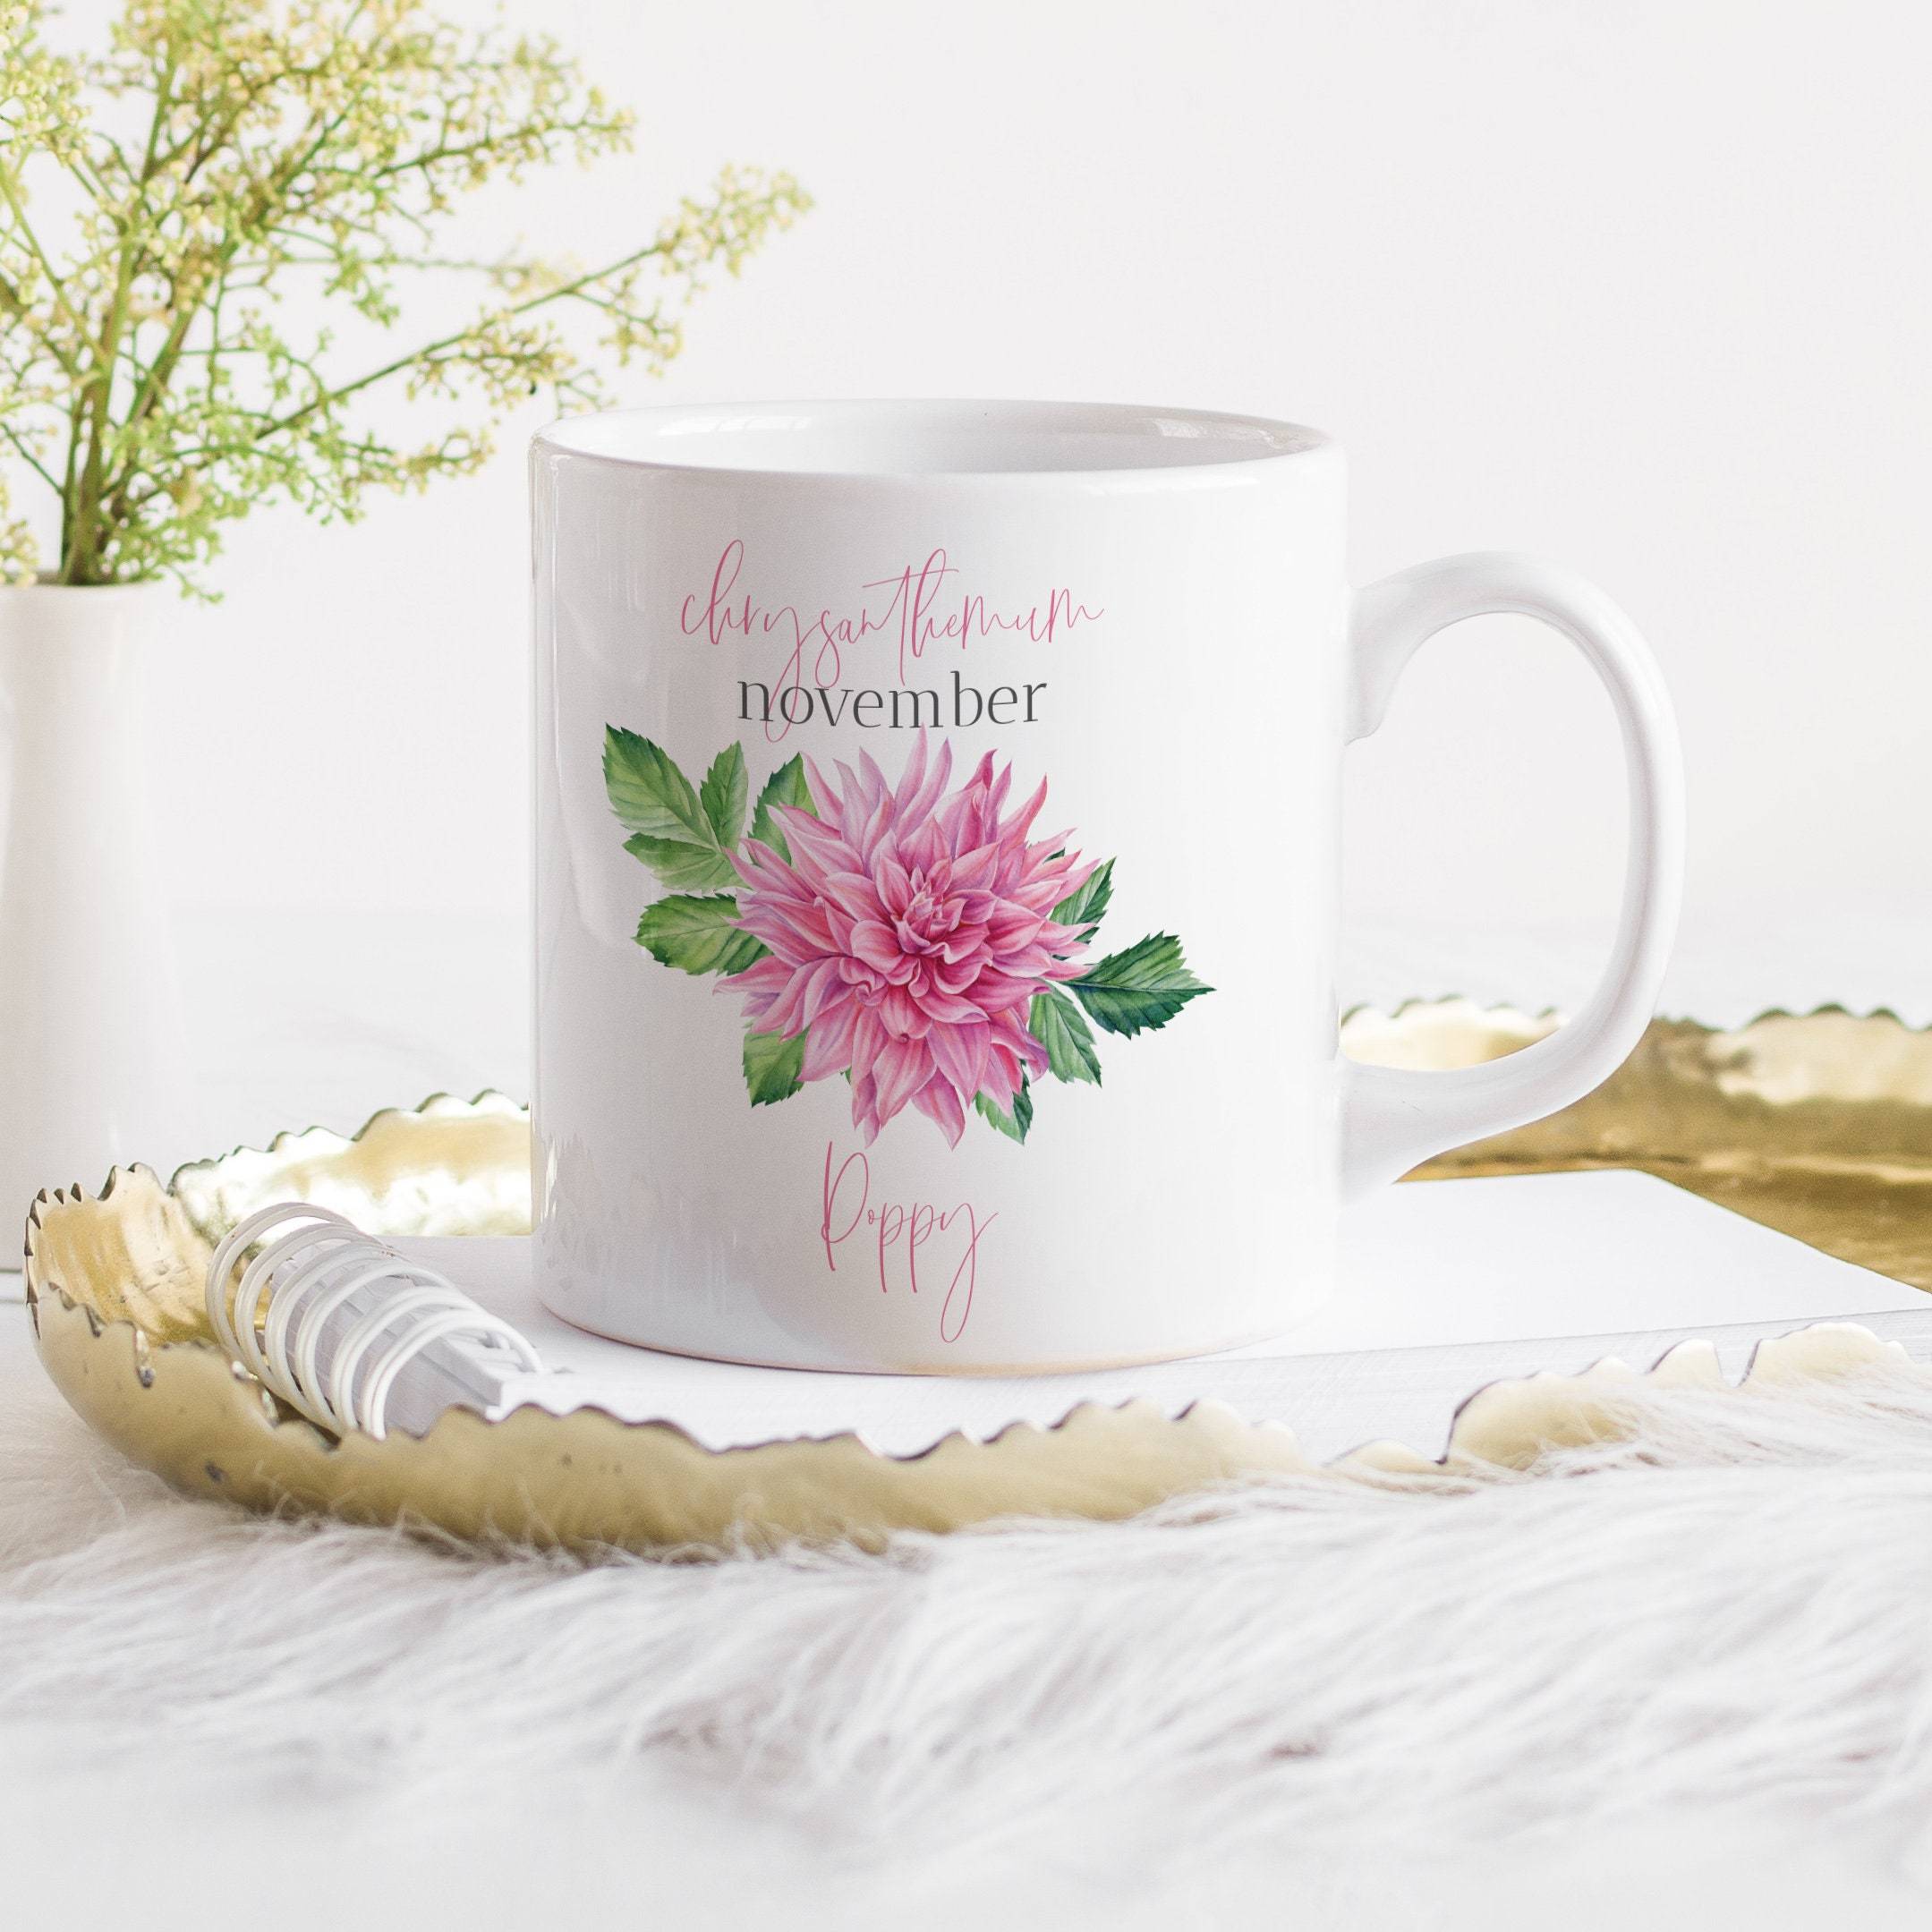 Personalised birth flower mug, November birth flower chrysanthemum, birthday gift